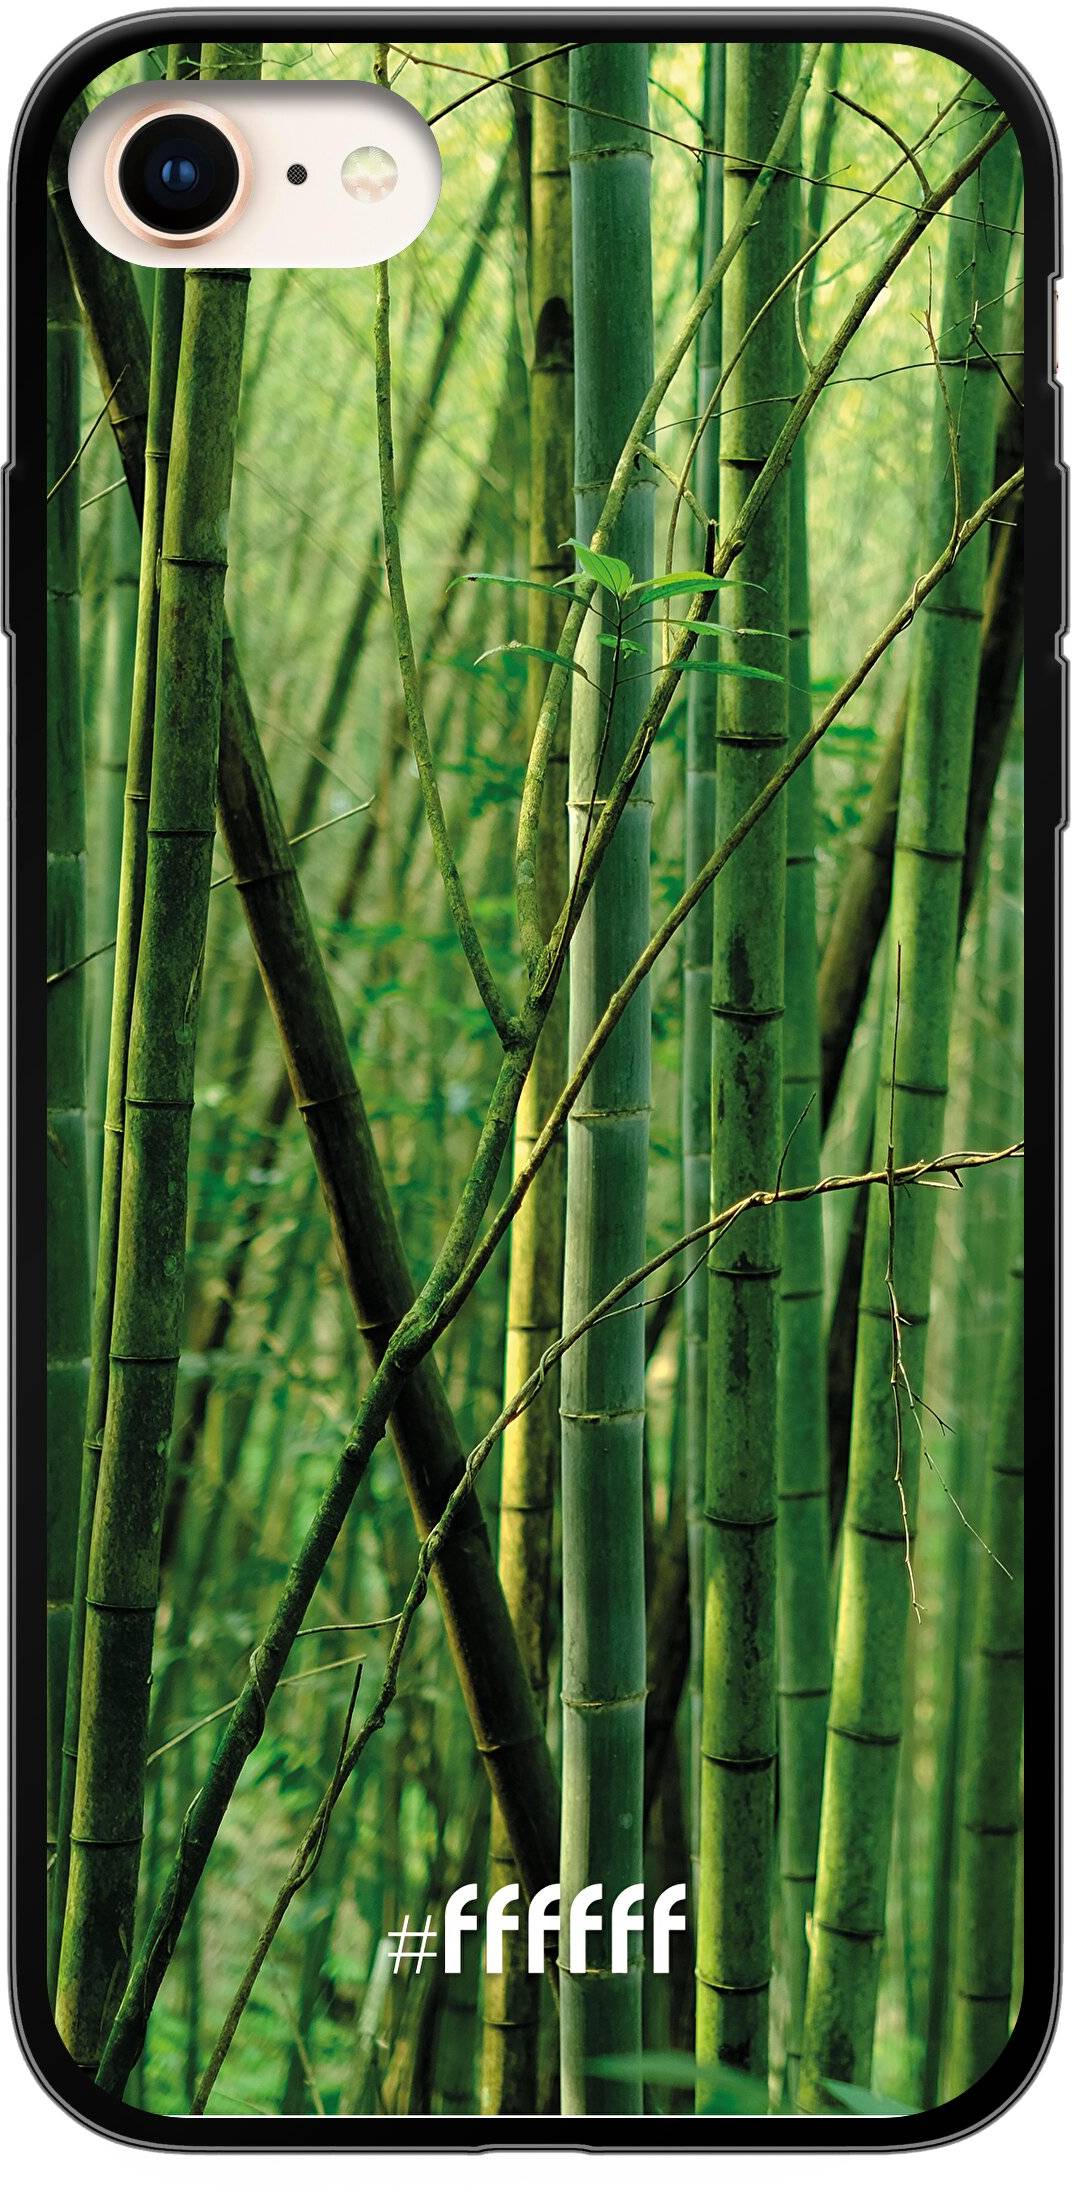 Bamboo iPhone 7